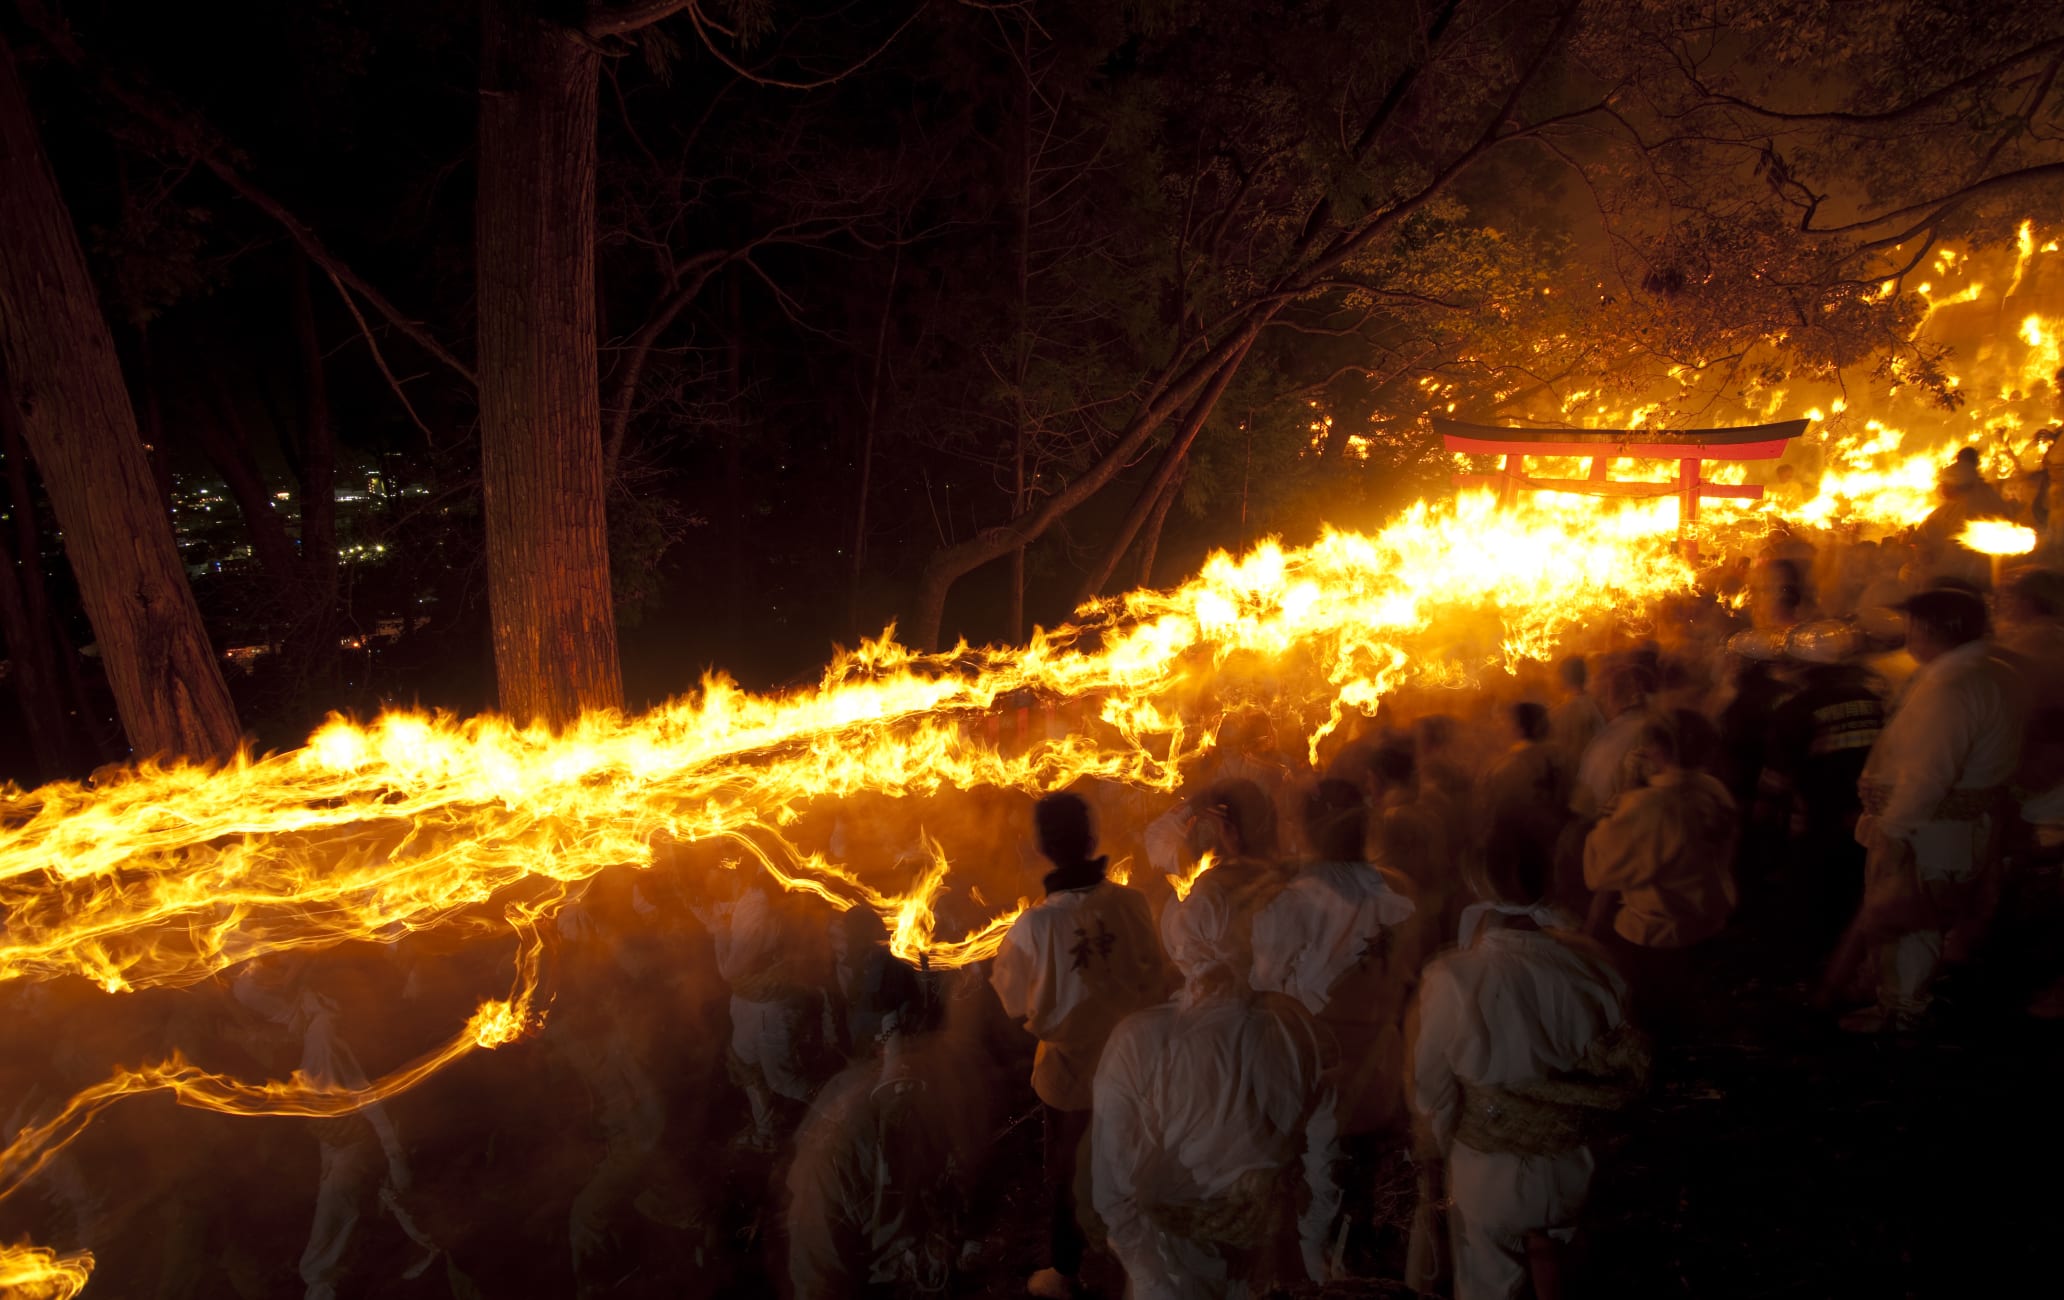 Shingu Fire Festival